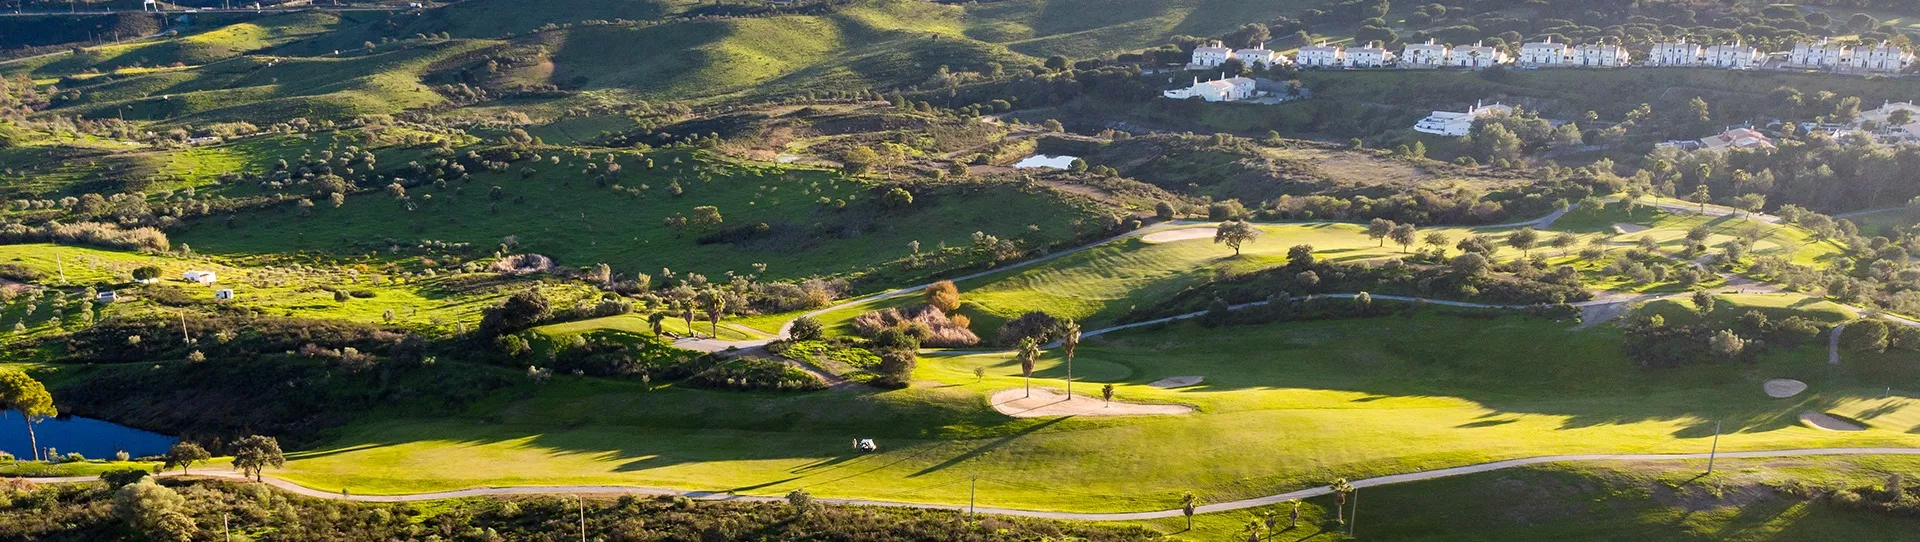 Portugal golf courses - Castro Marim Golf Course - Photo 1